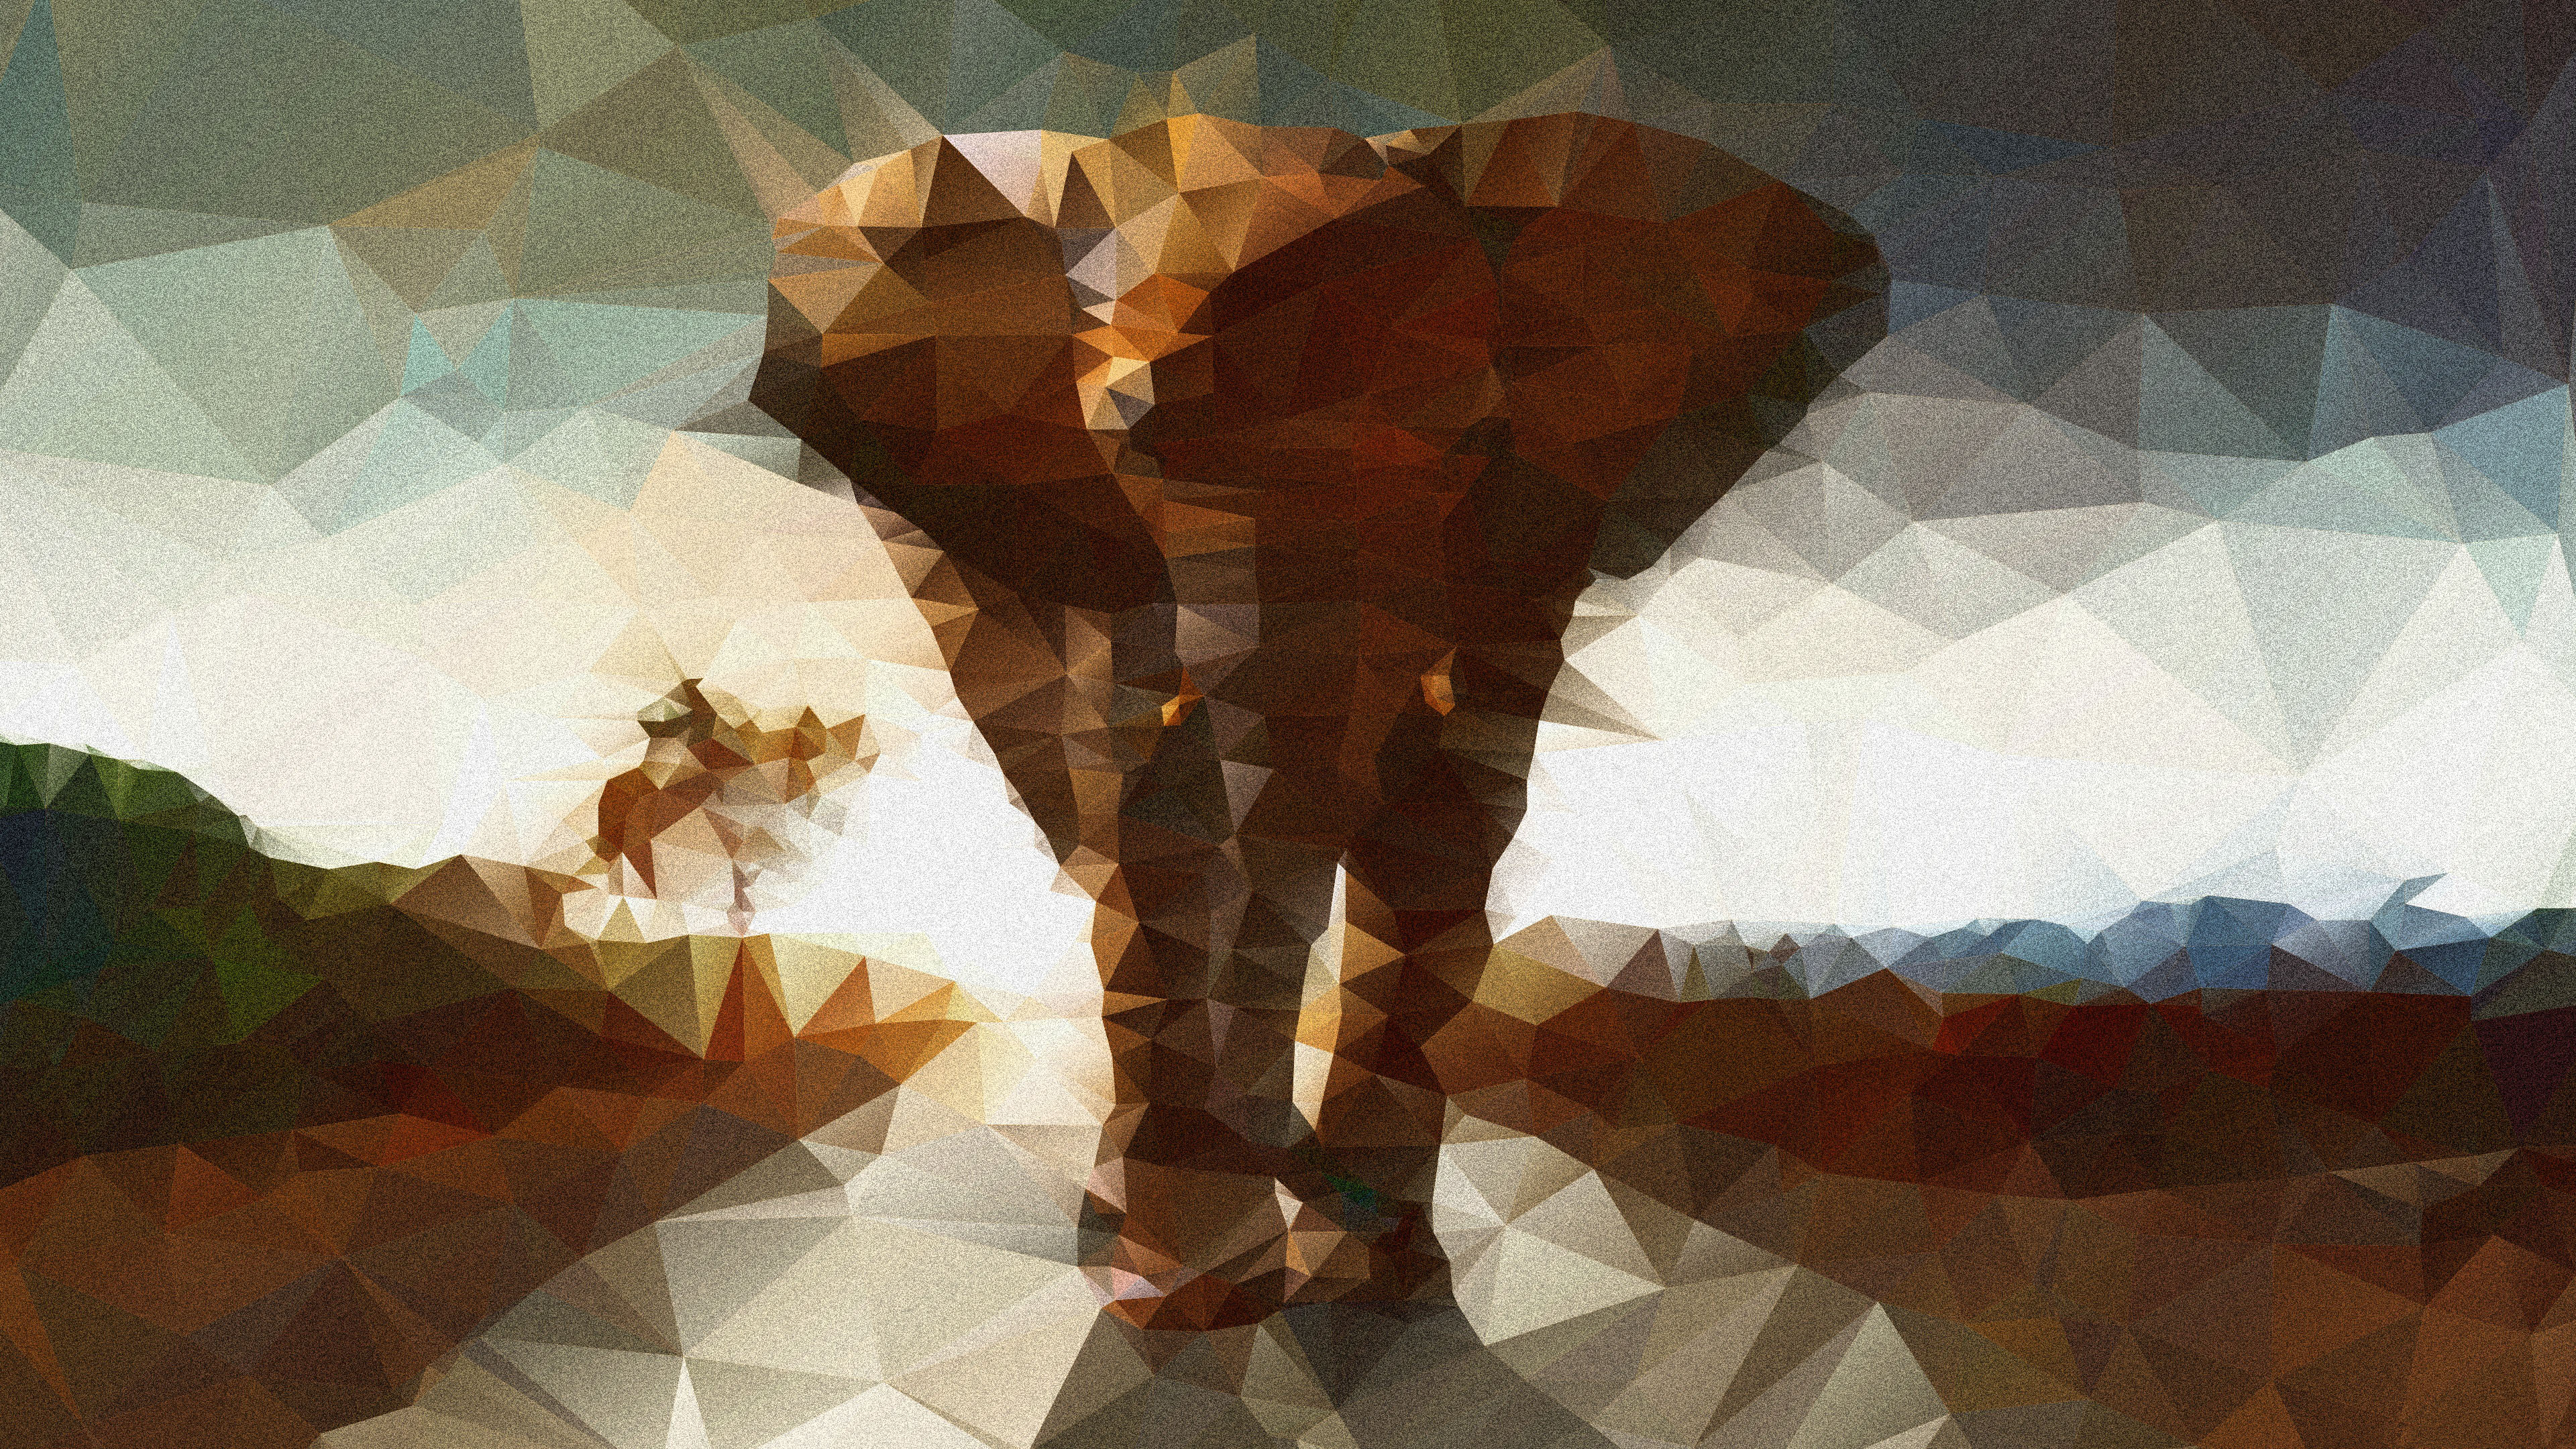 elephants, animal, african bush elephant